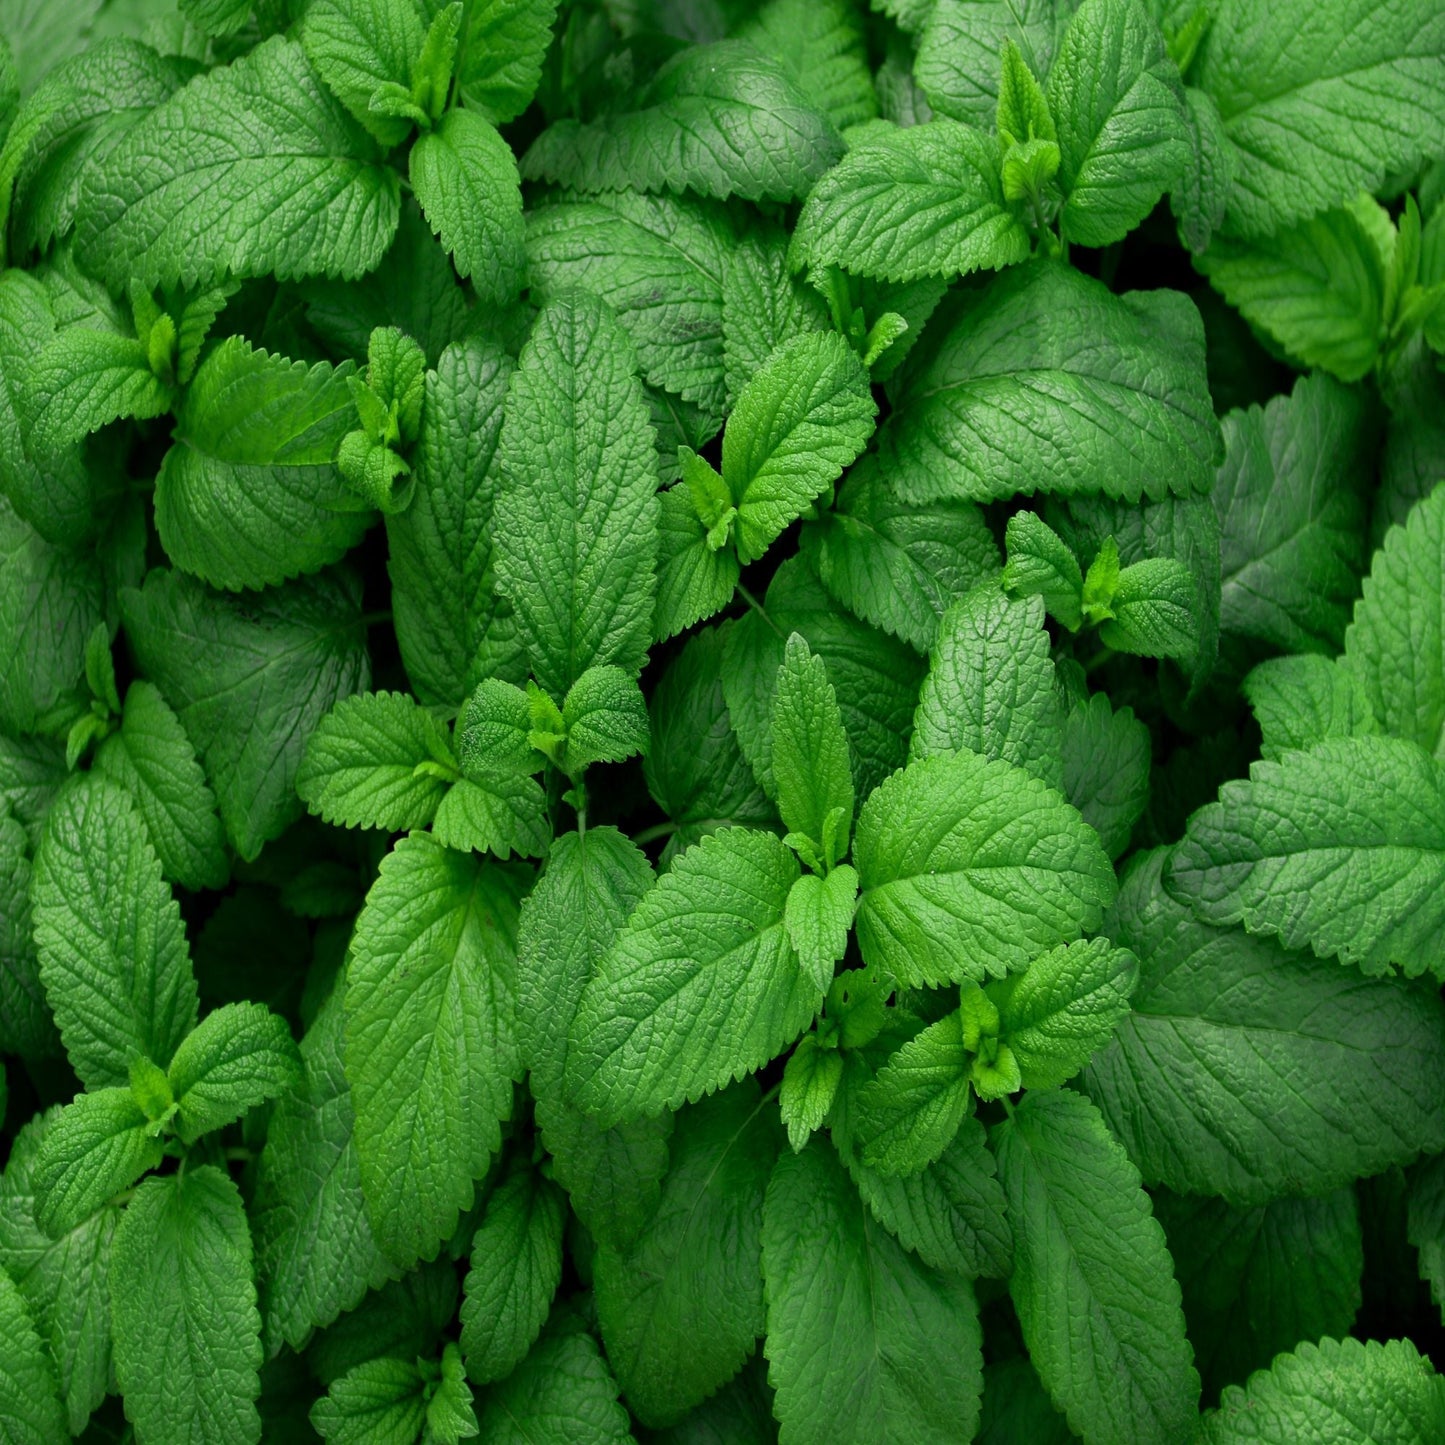 Herb Plants - Garden Mint - 2 x Full Plants in 10.5cm Pots - AcquaGarden